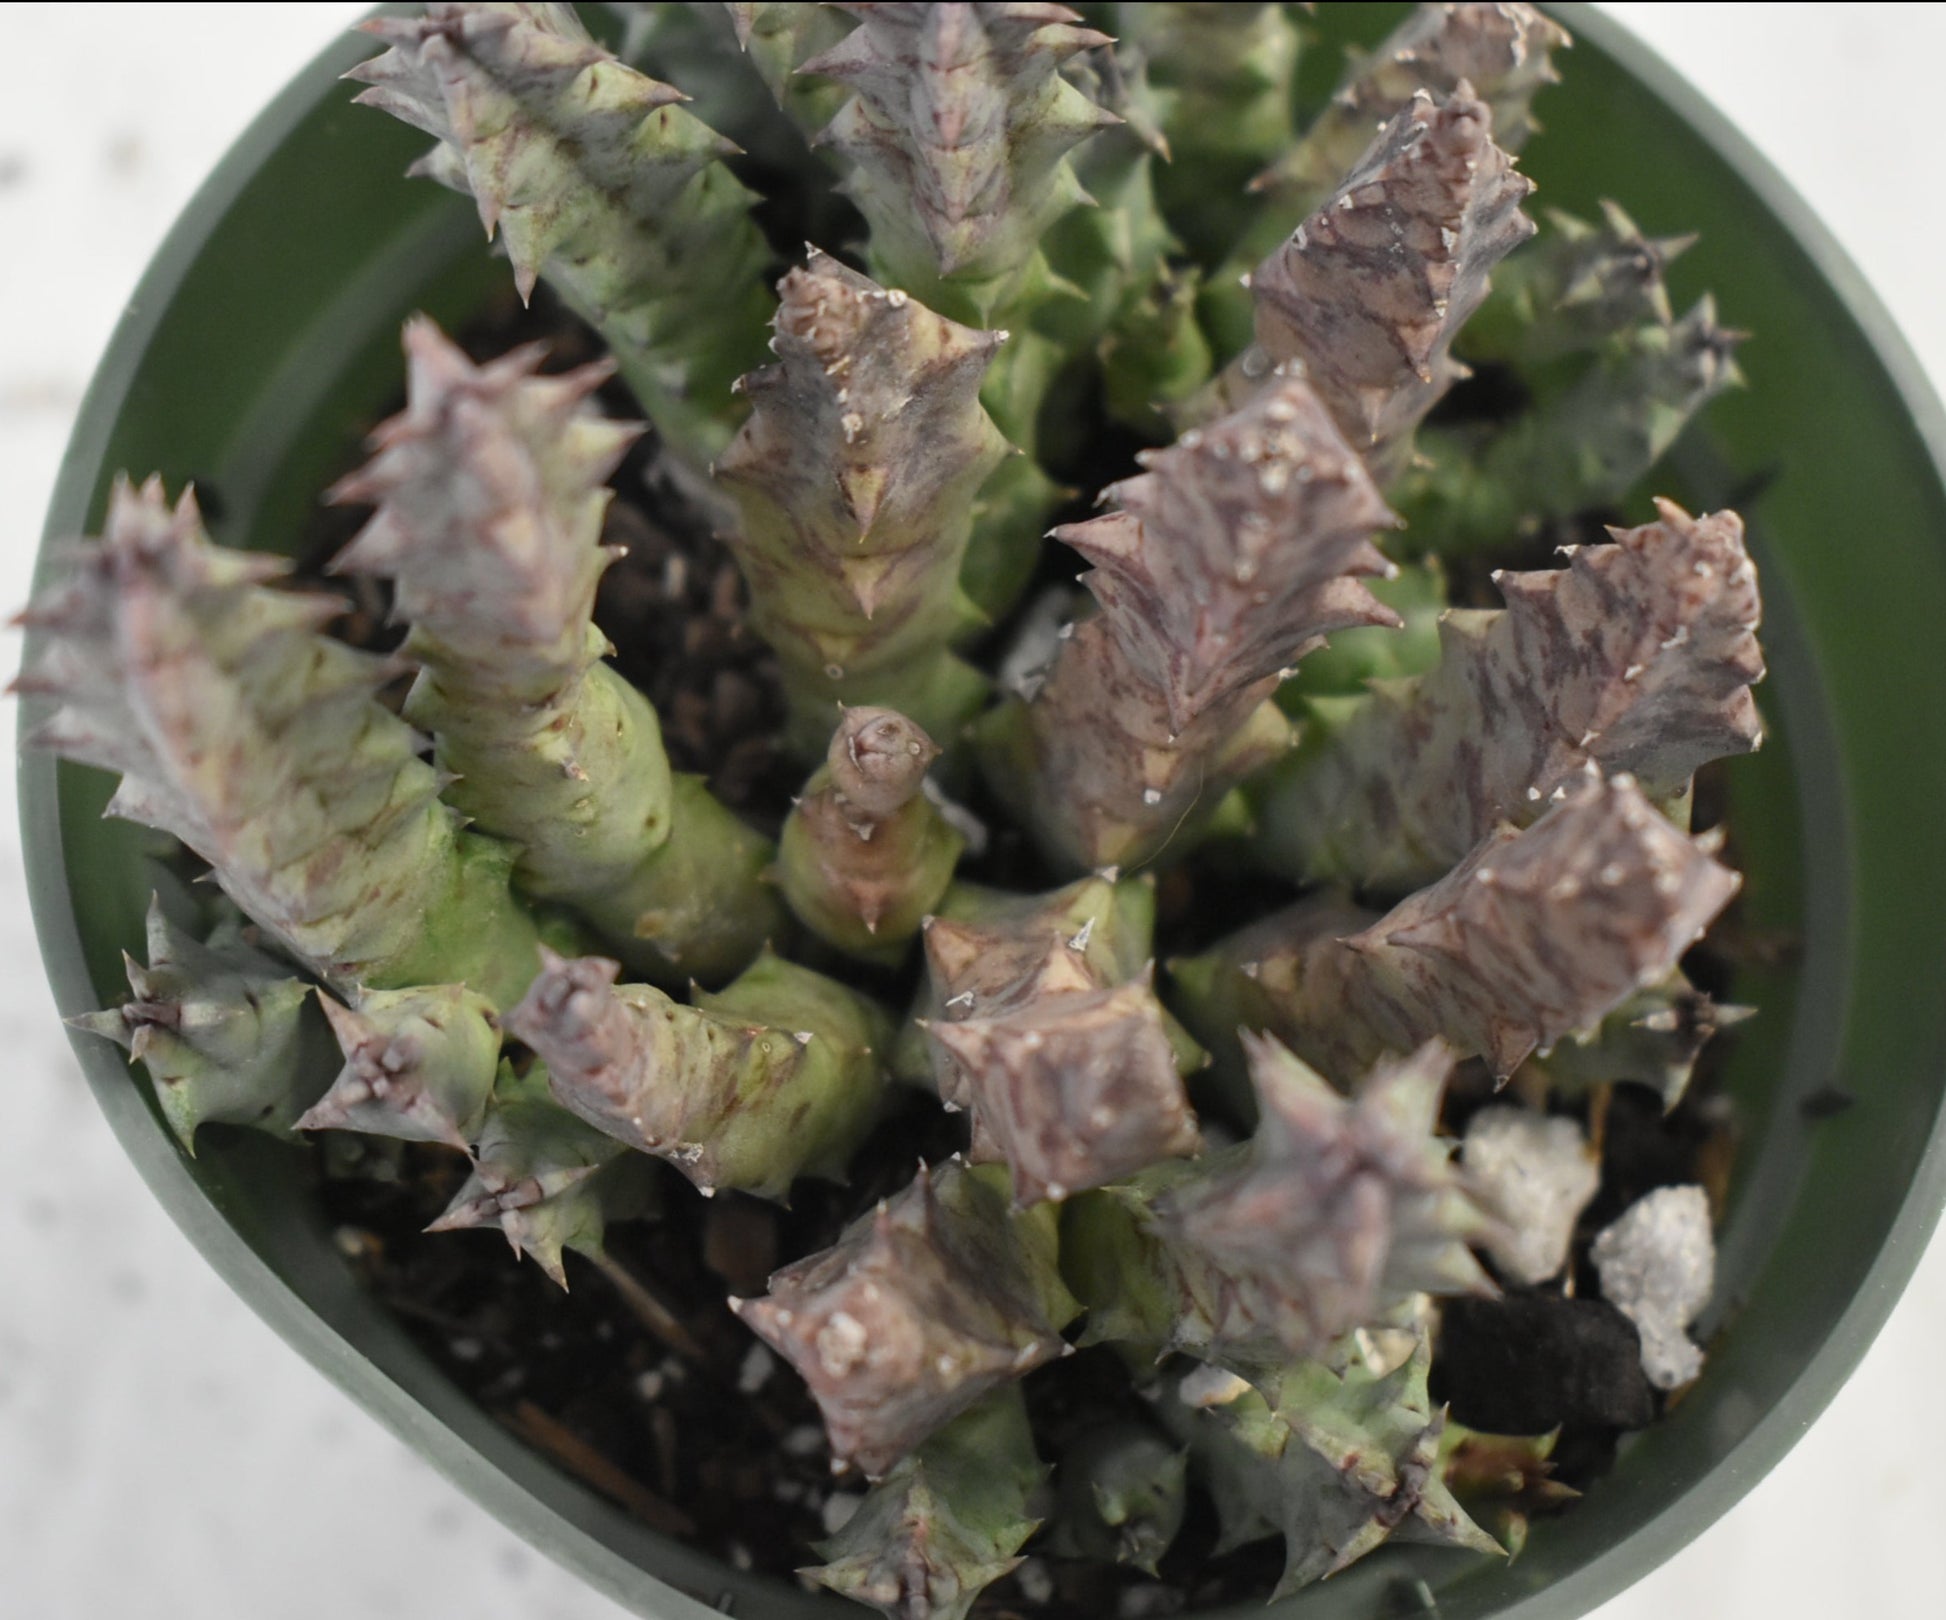 Huernia thuretii Live Succulent In 4 Inch